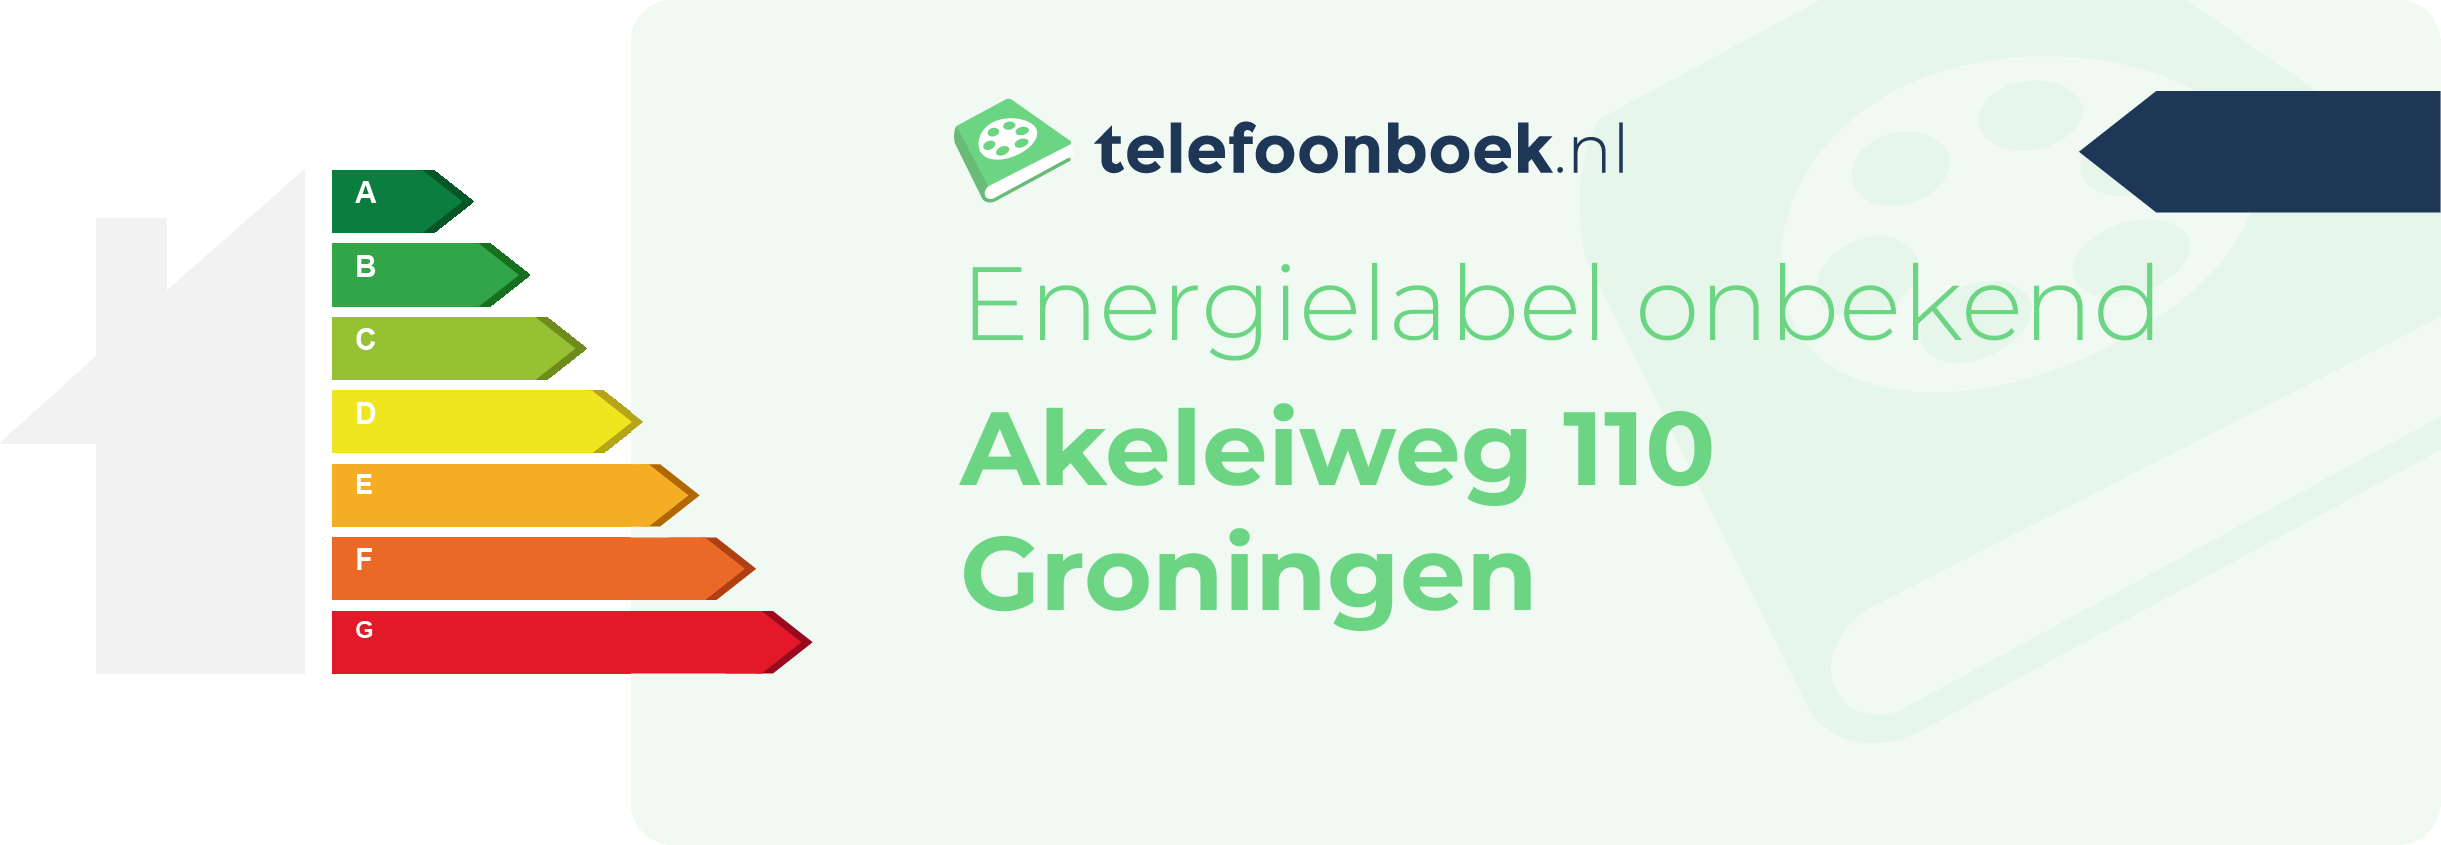 Energielabel Akeleiweg 110 Groningen